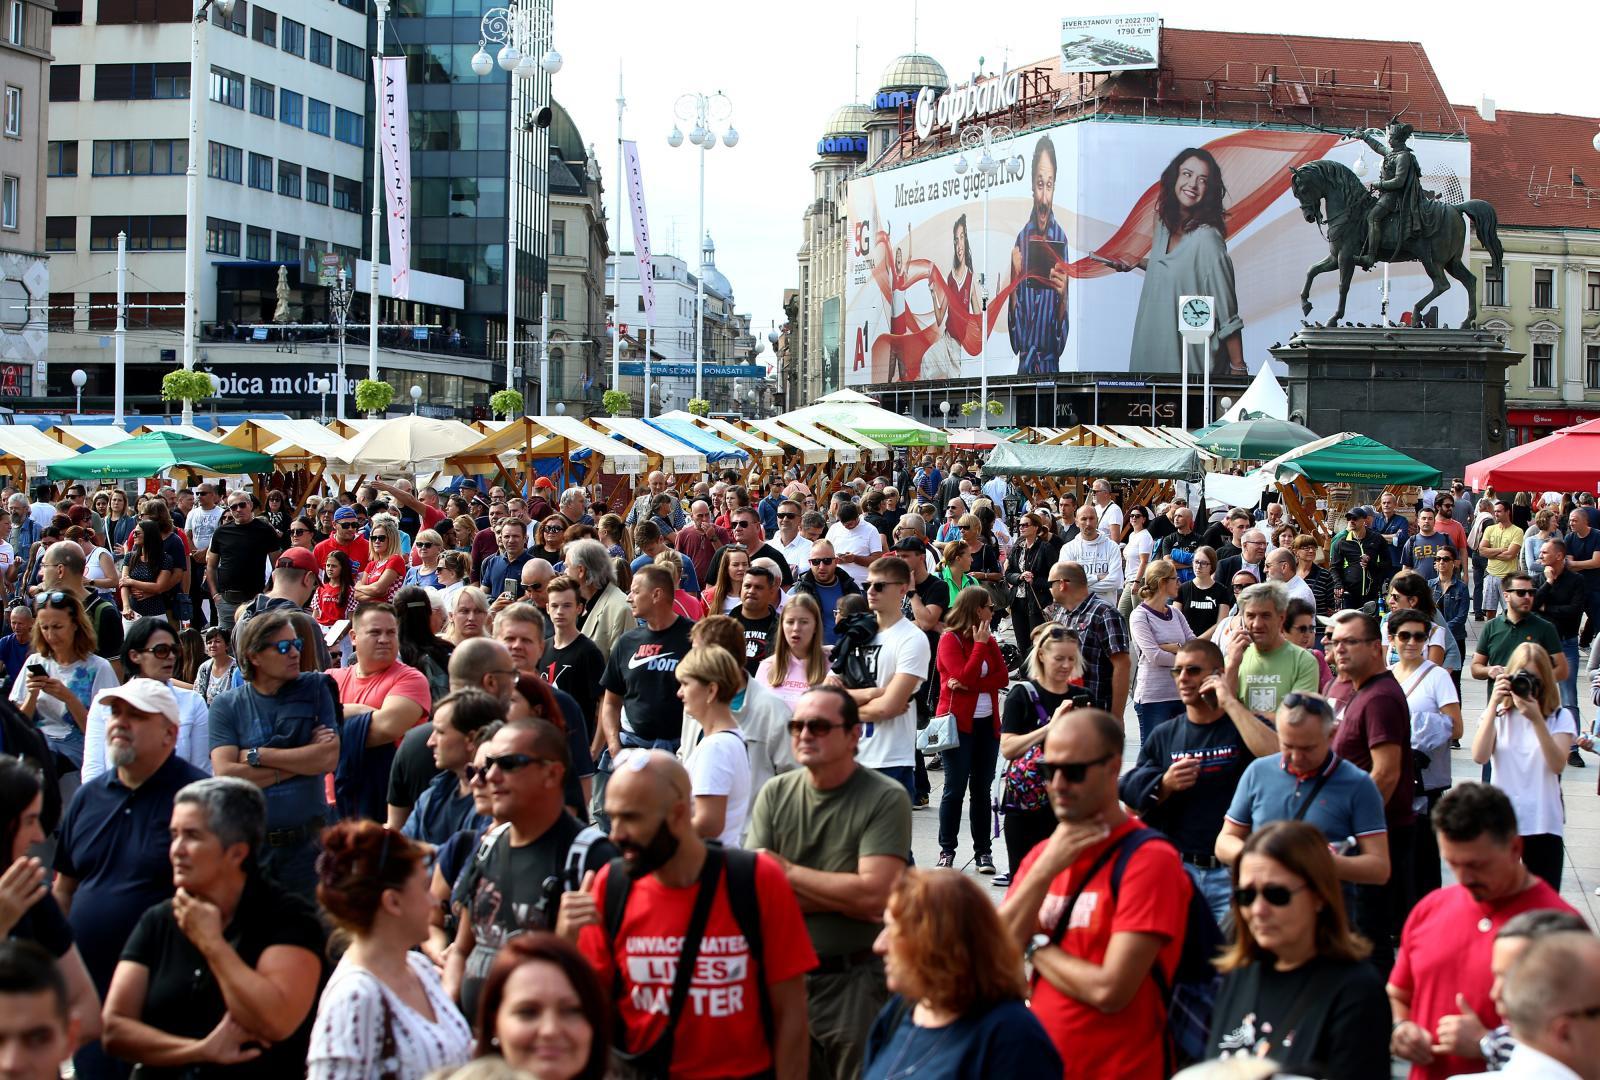 18.09.2021., Zagreb - Na Trgu bana Josipa Jelacica odrzan je Festival slobode 2.0. cija je glavna tema "Kako biti covjek i ostati slobodan kad nam se ljudskost i sloboda pokusavaju oduzeti". Photo: Matija Habljak/PIXSELL